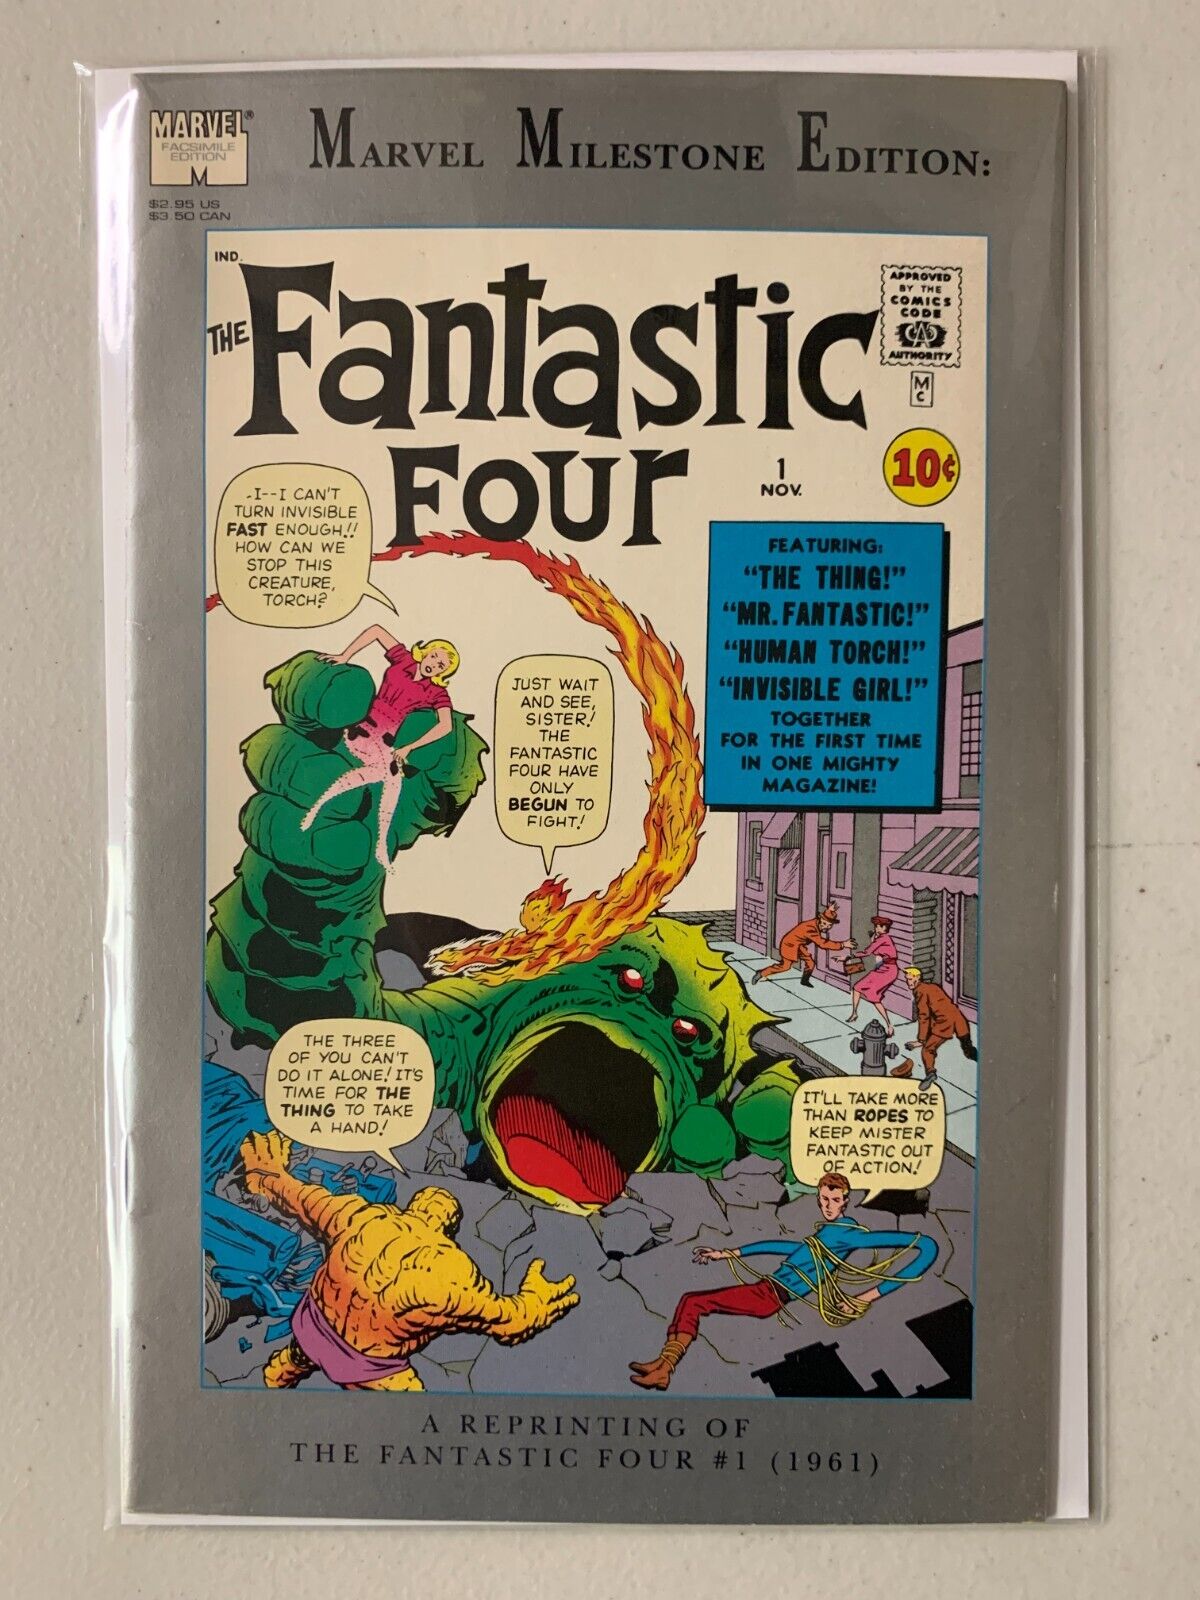 Marvel Milestone Edition Fantastic Four #1 6.0 FN (1991)